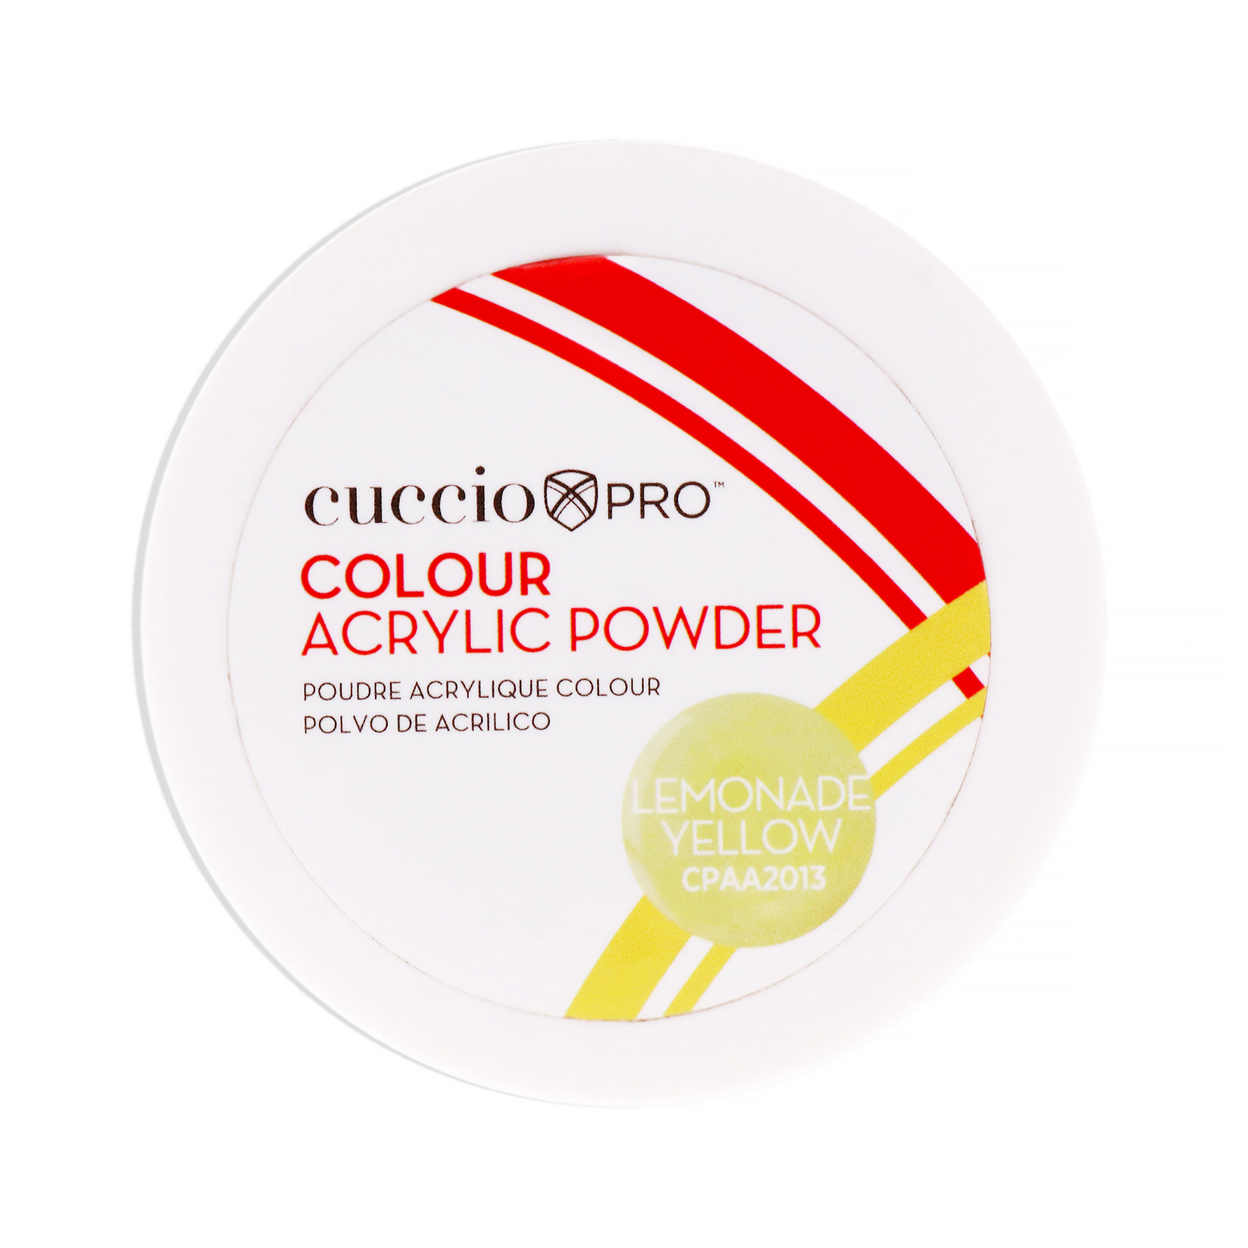 Cuccio PRO Colour Acrylic Powder - Lemonade Yellow 1.6 Oz